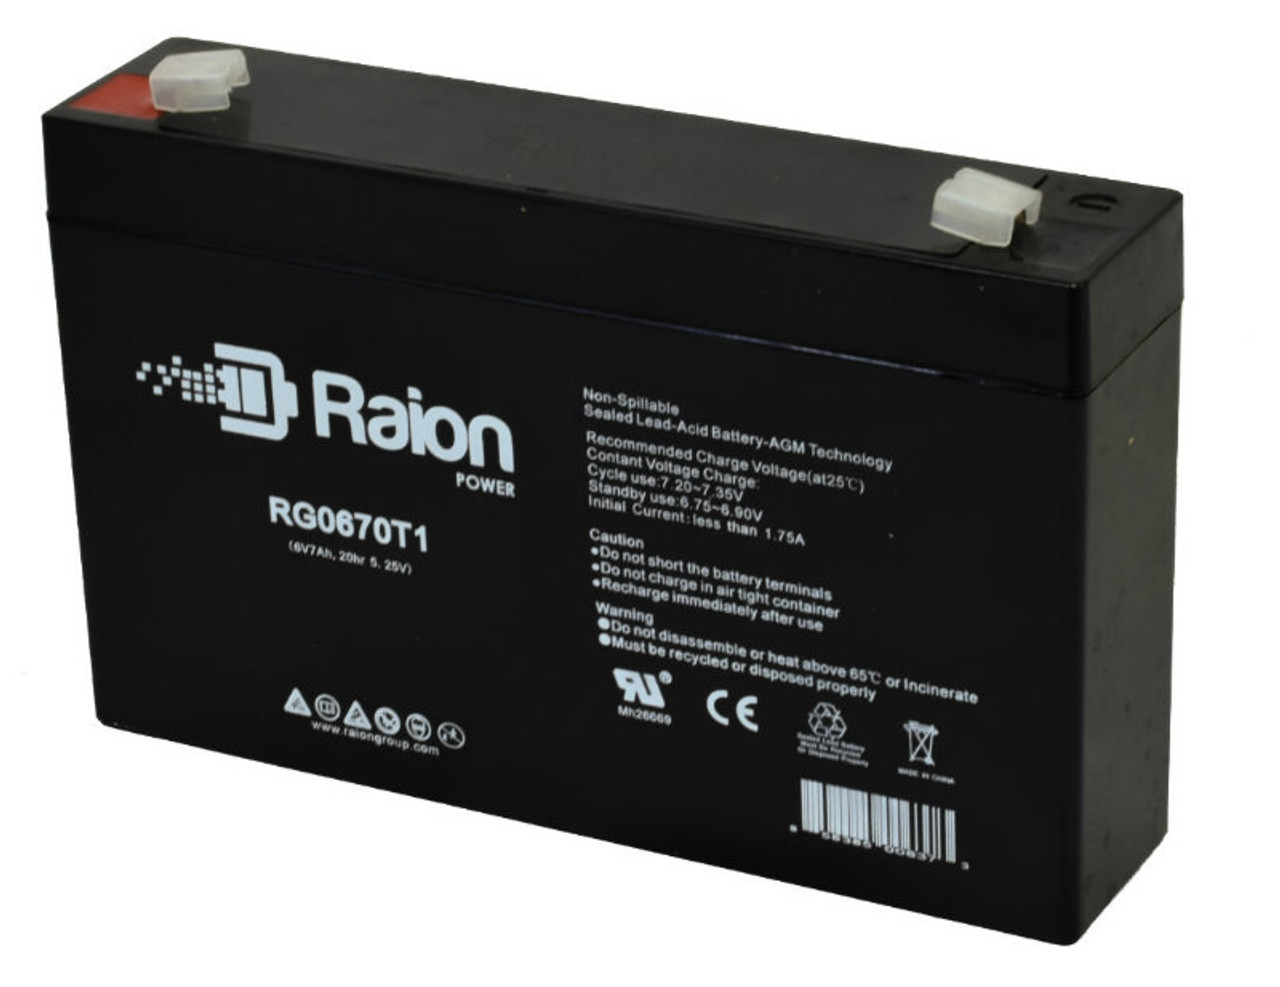 Raion Power RG0670T1 Replacement Battery for Douglas DG67 OEM Battery